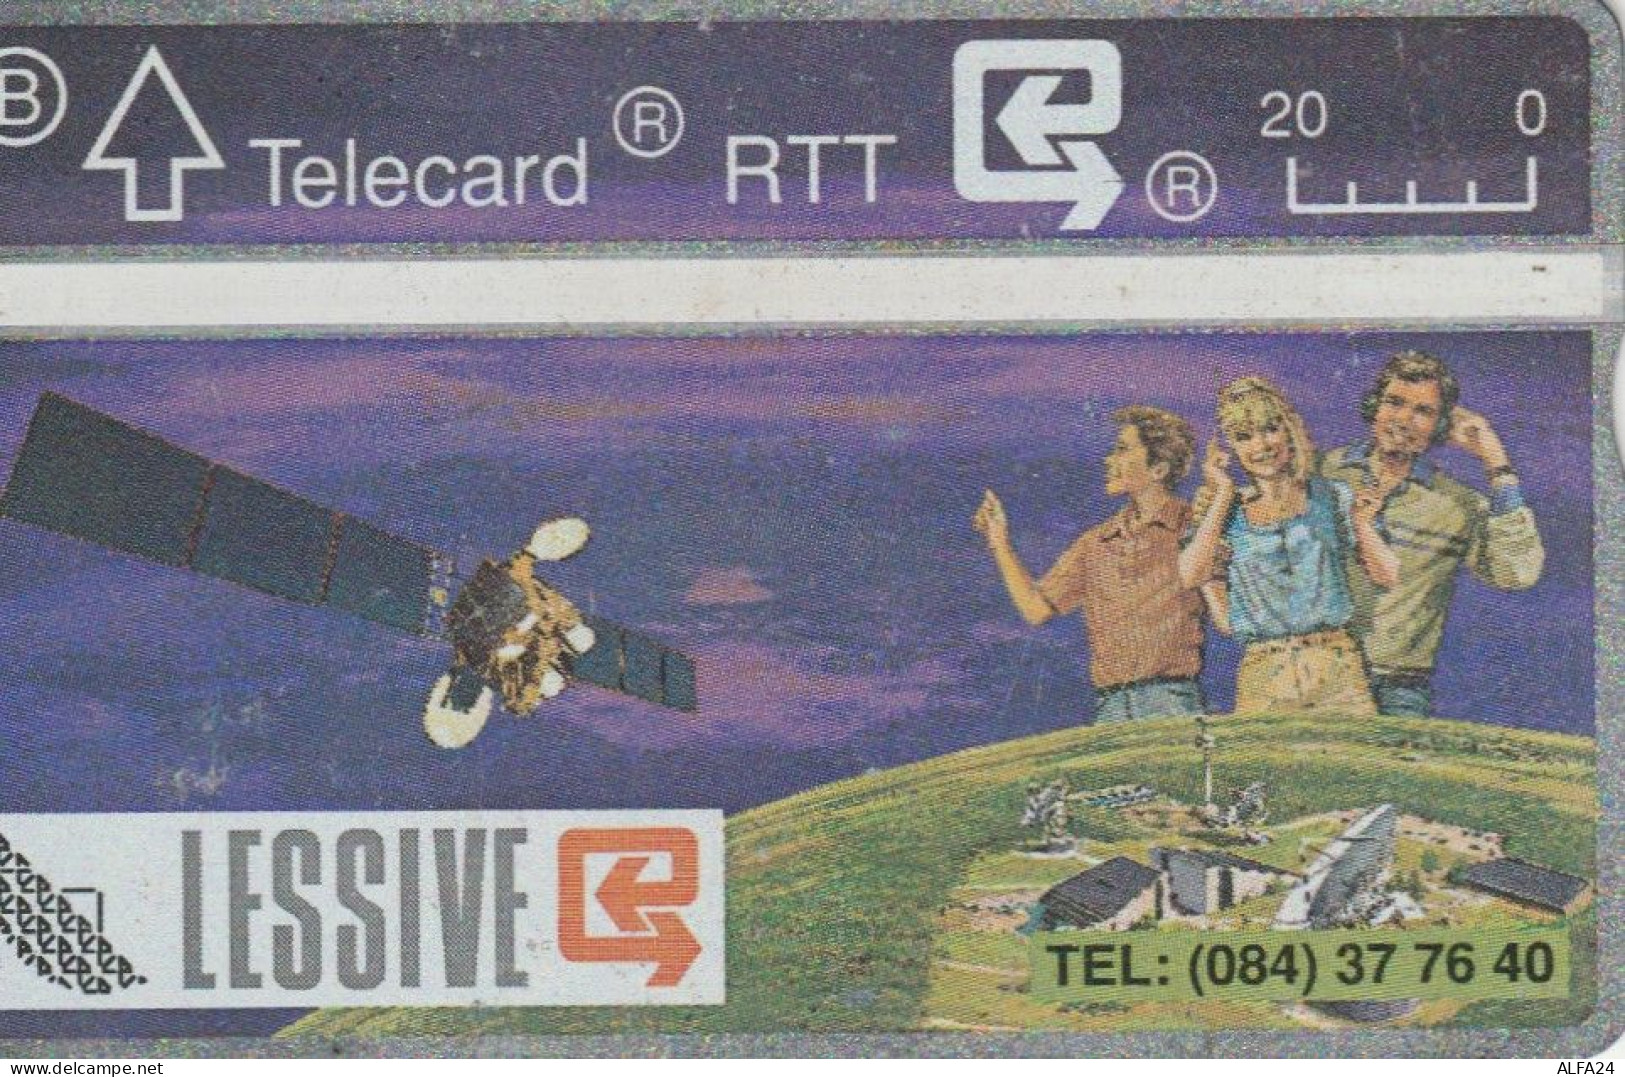 PHONE CARD BELGIO LANDIS (CK6019 - Senza Chip